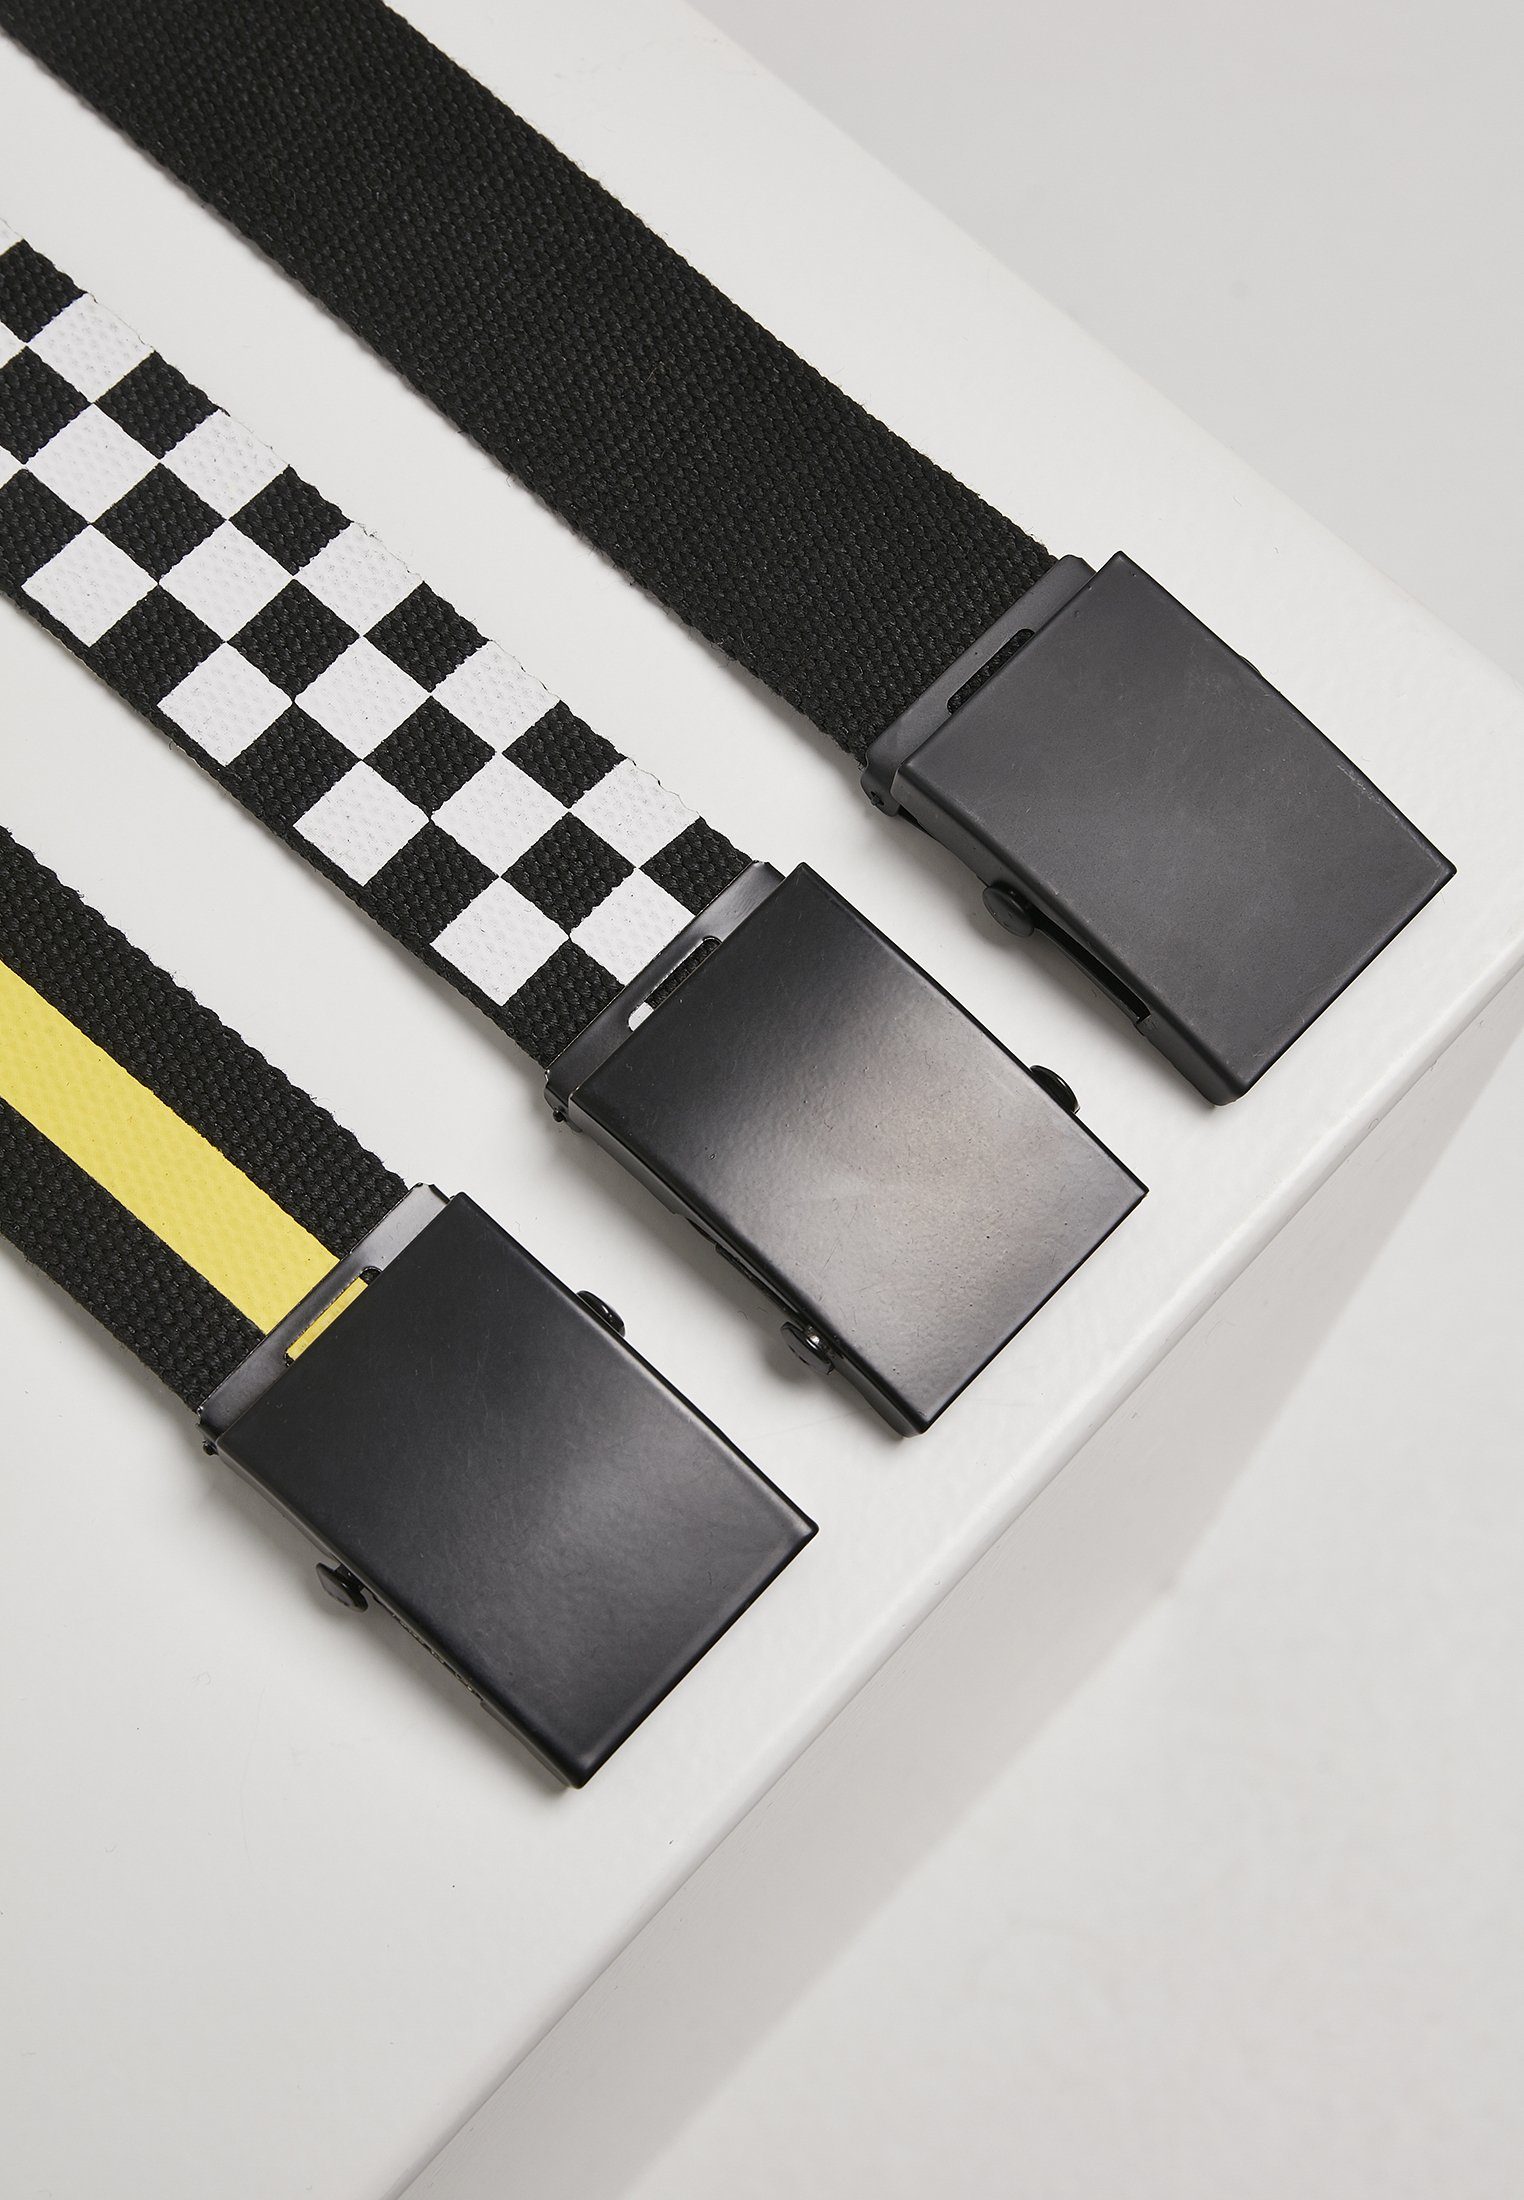 URBAN black-white-yellow Trio Hüftgürtel Belts CLASSICS Accessoires